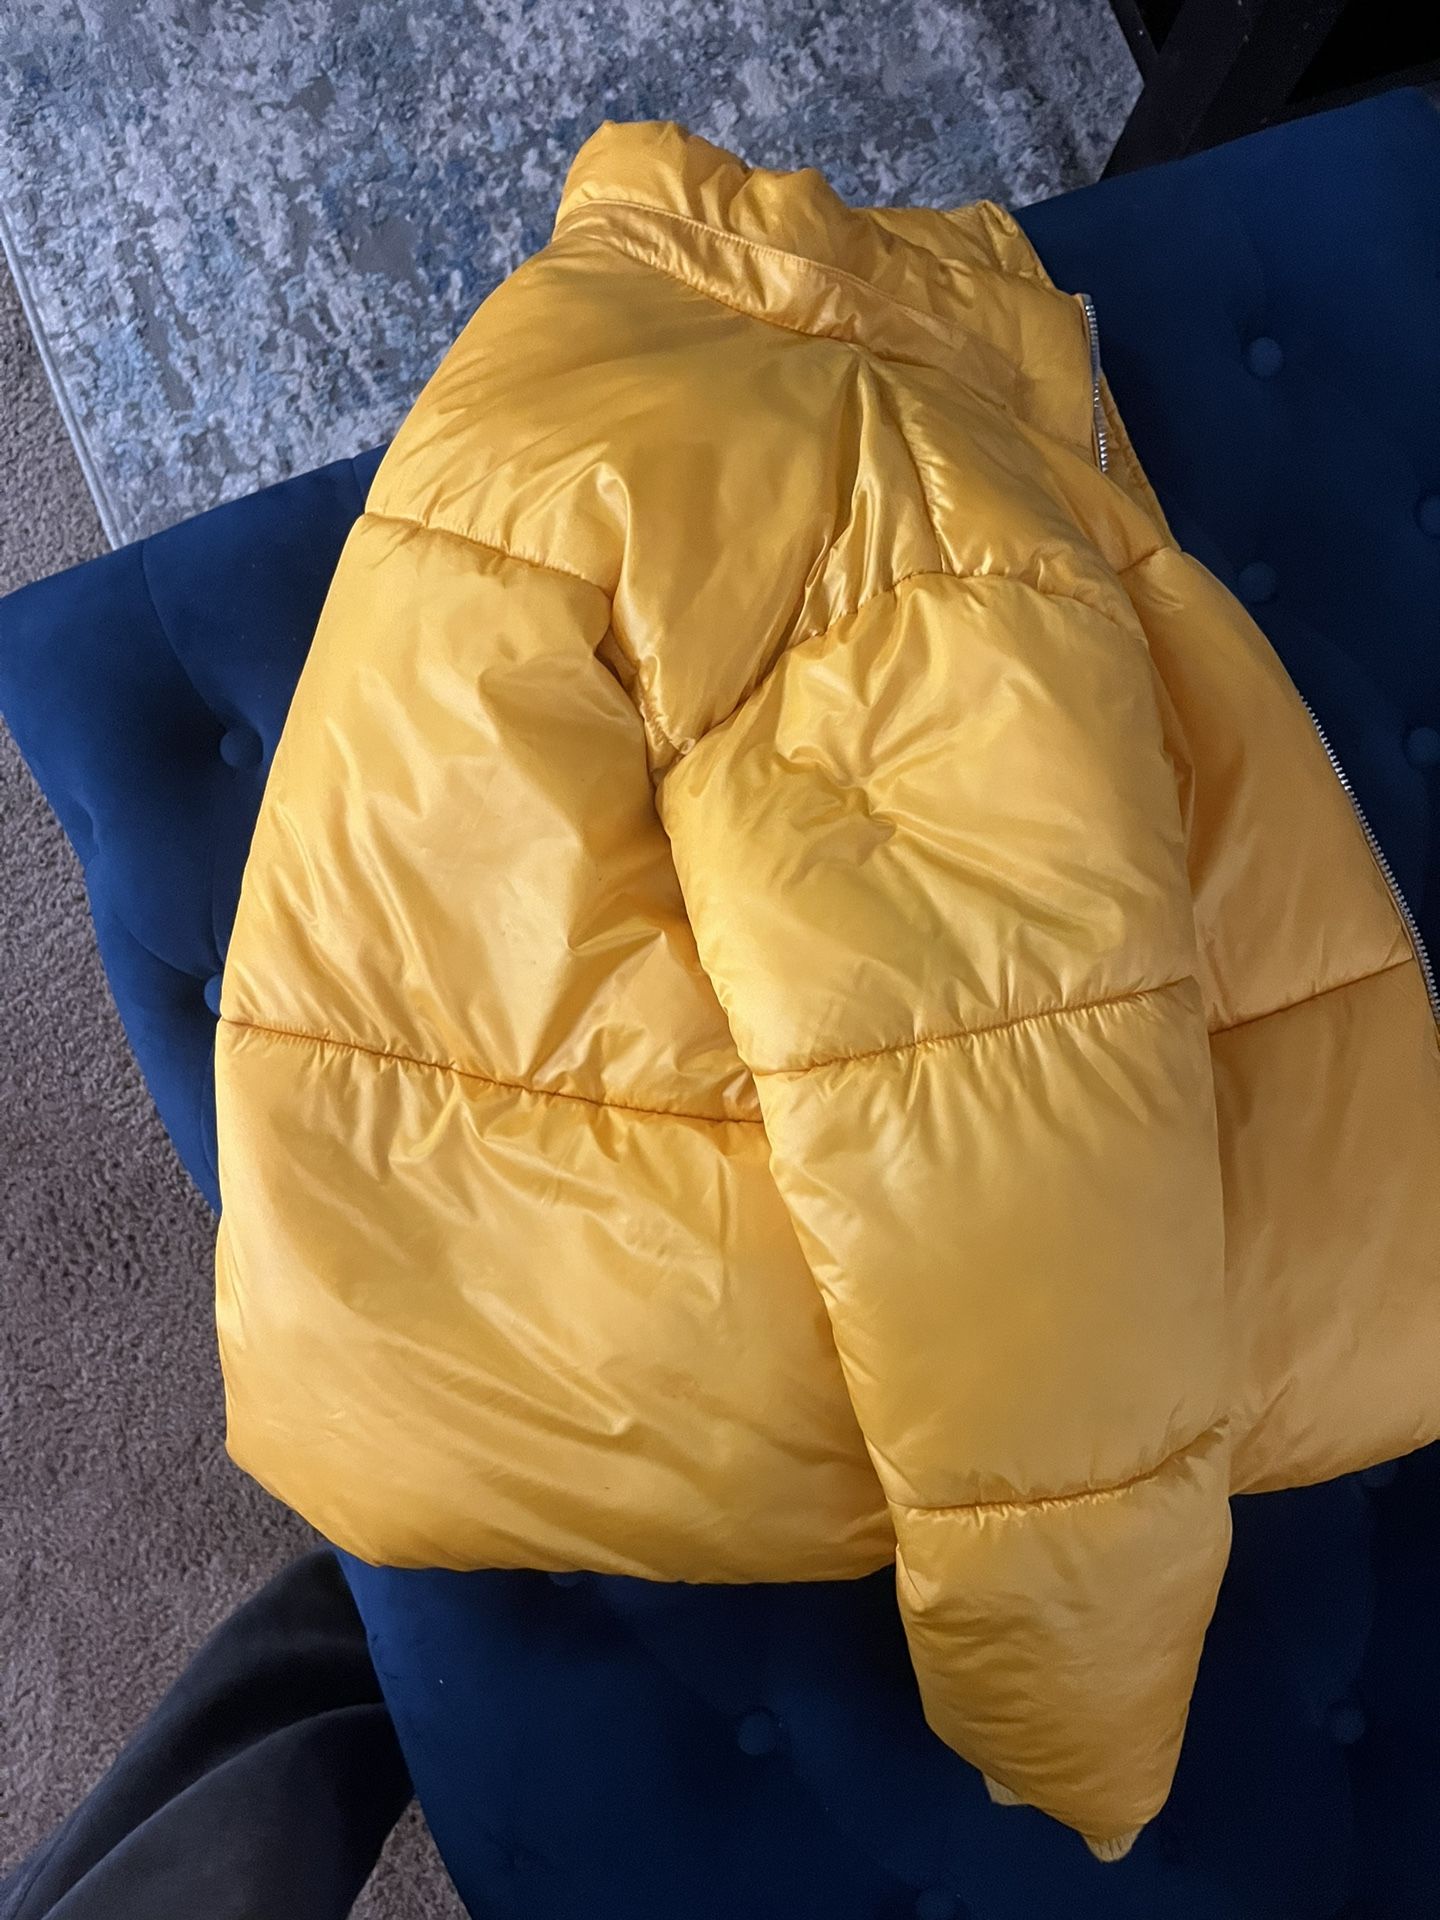 Tommy Hilfiger puffer Jacket (L size)